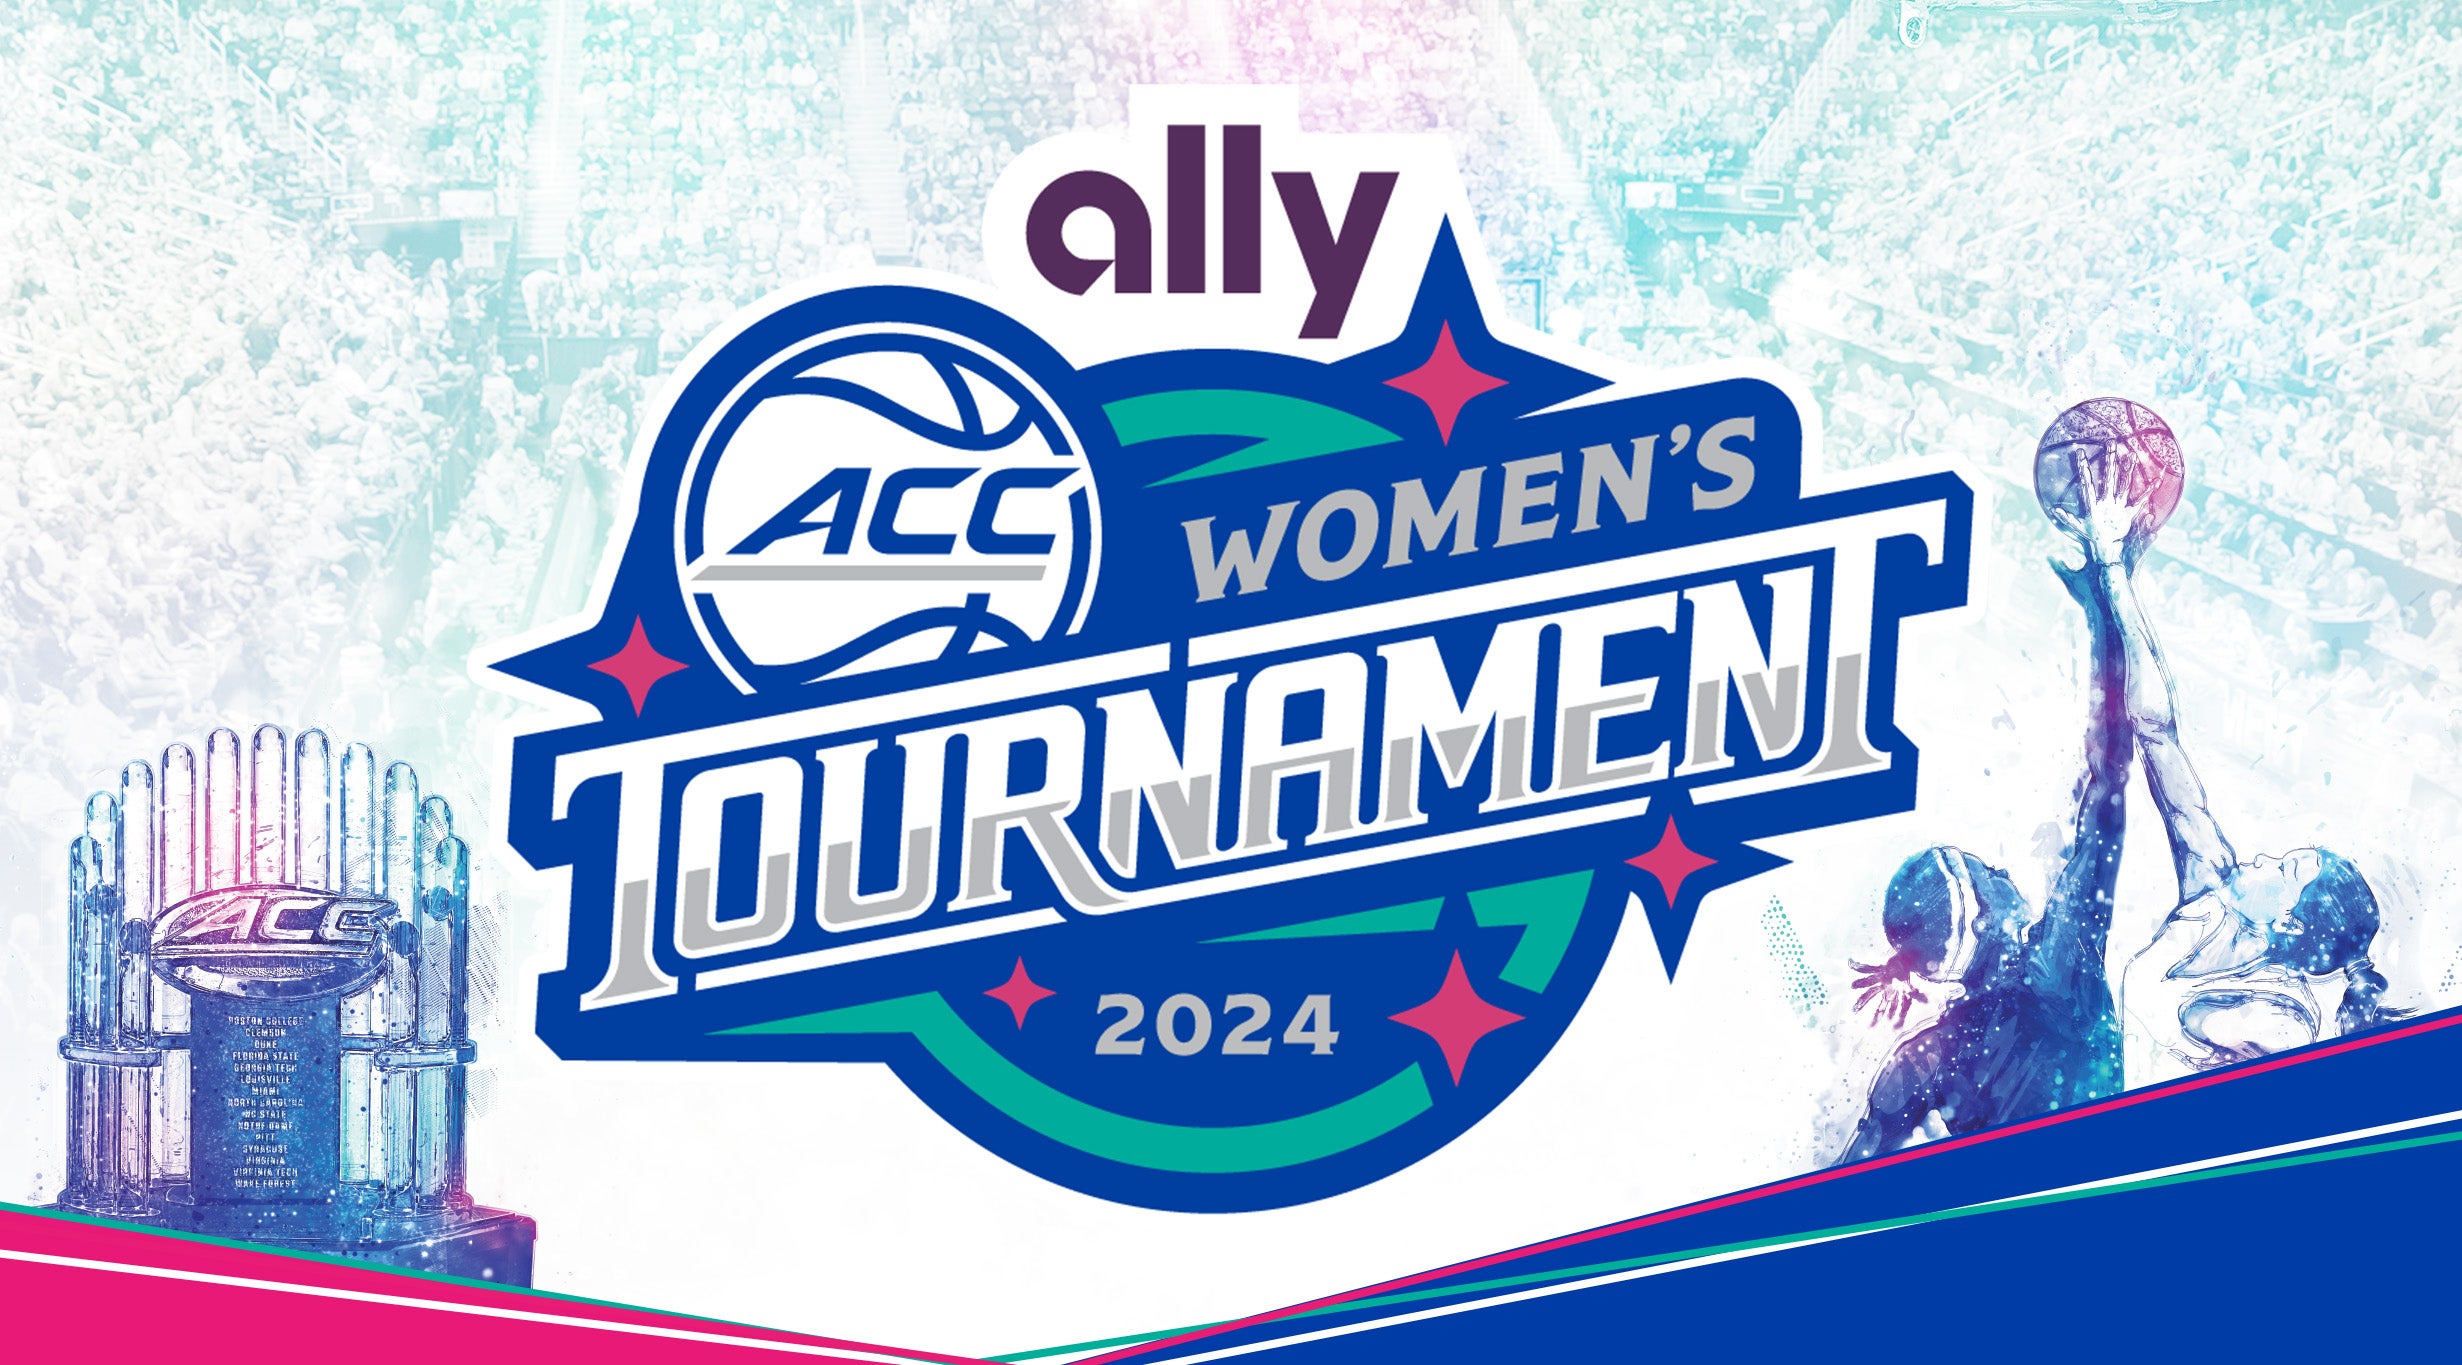 Ally ACC Womens Basketball Tournament Championship in Greensboro promo photo for Venue presale offer code